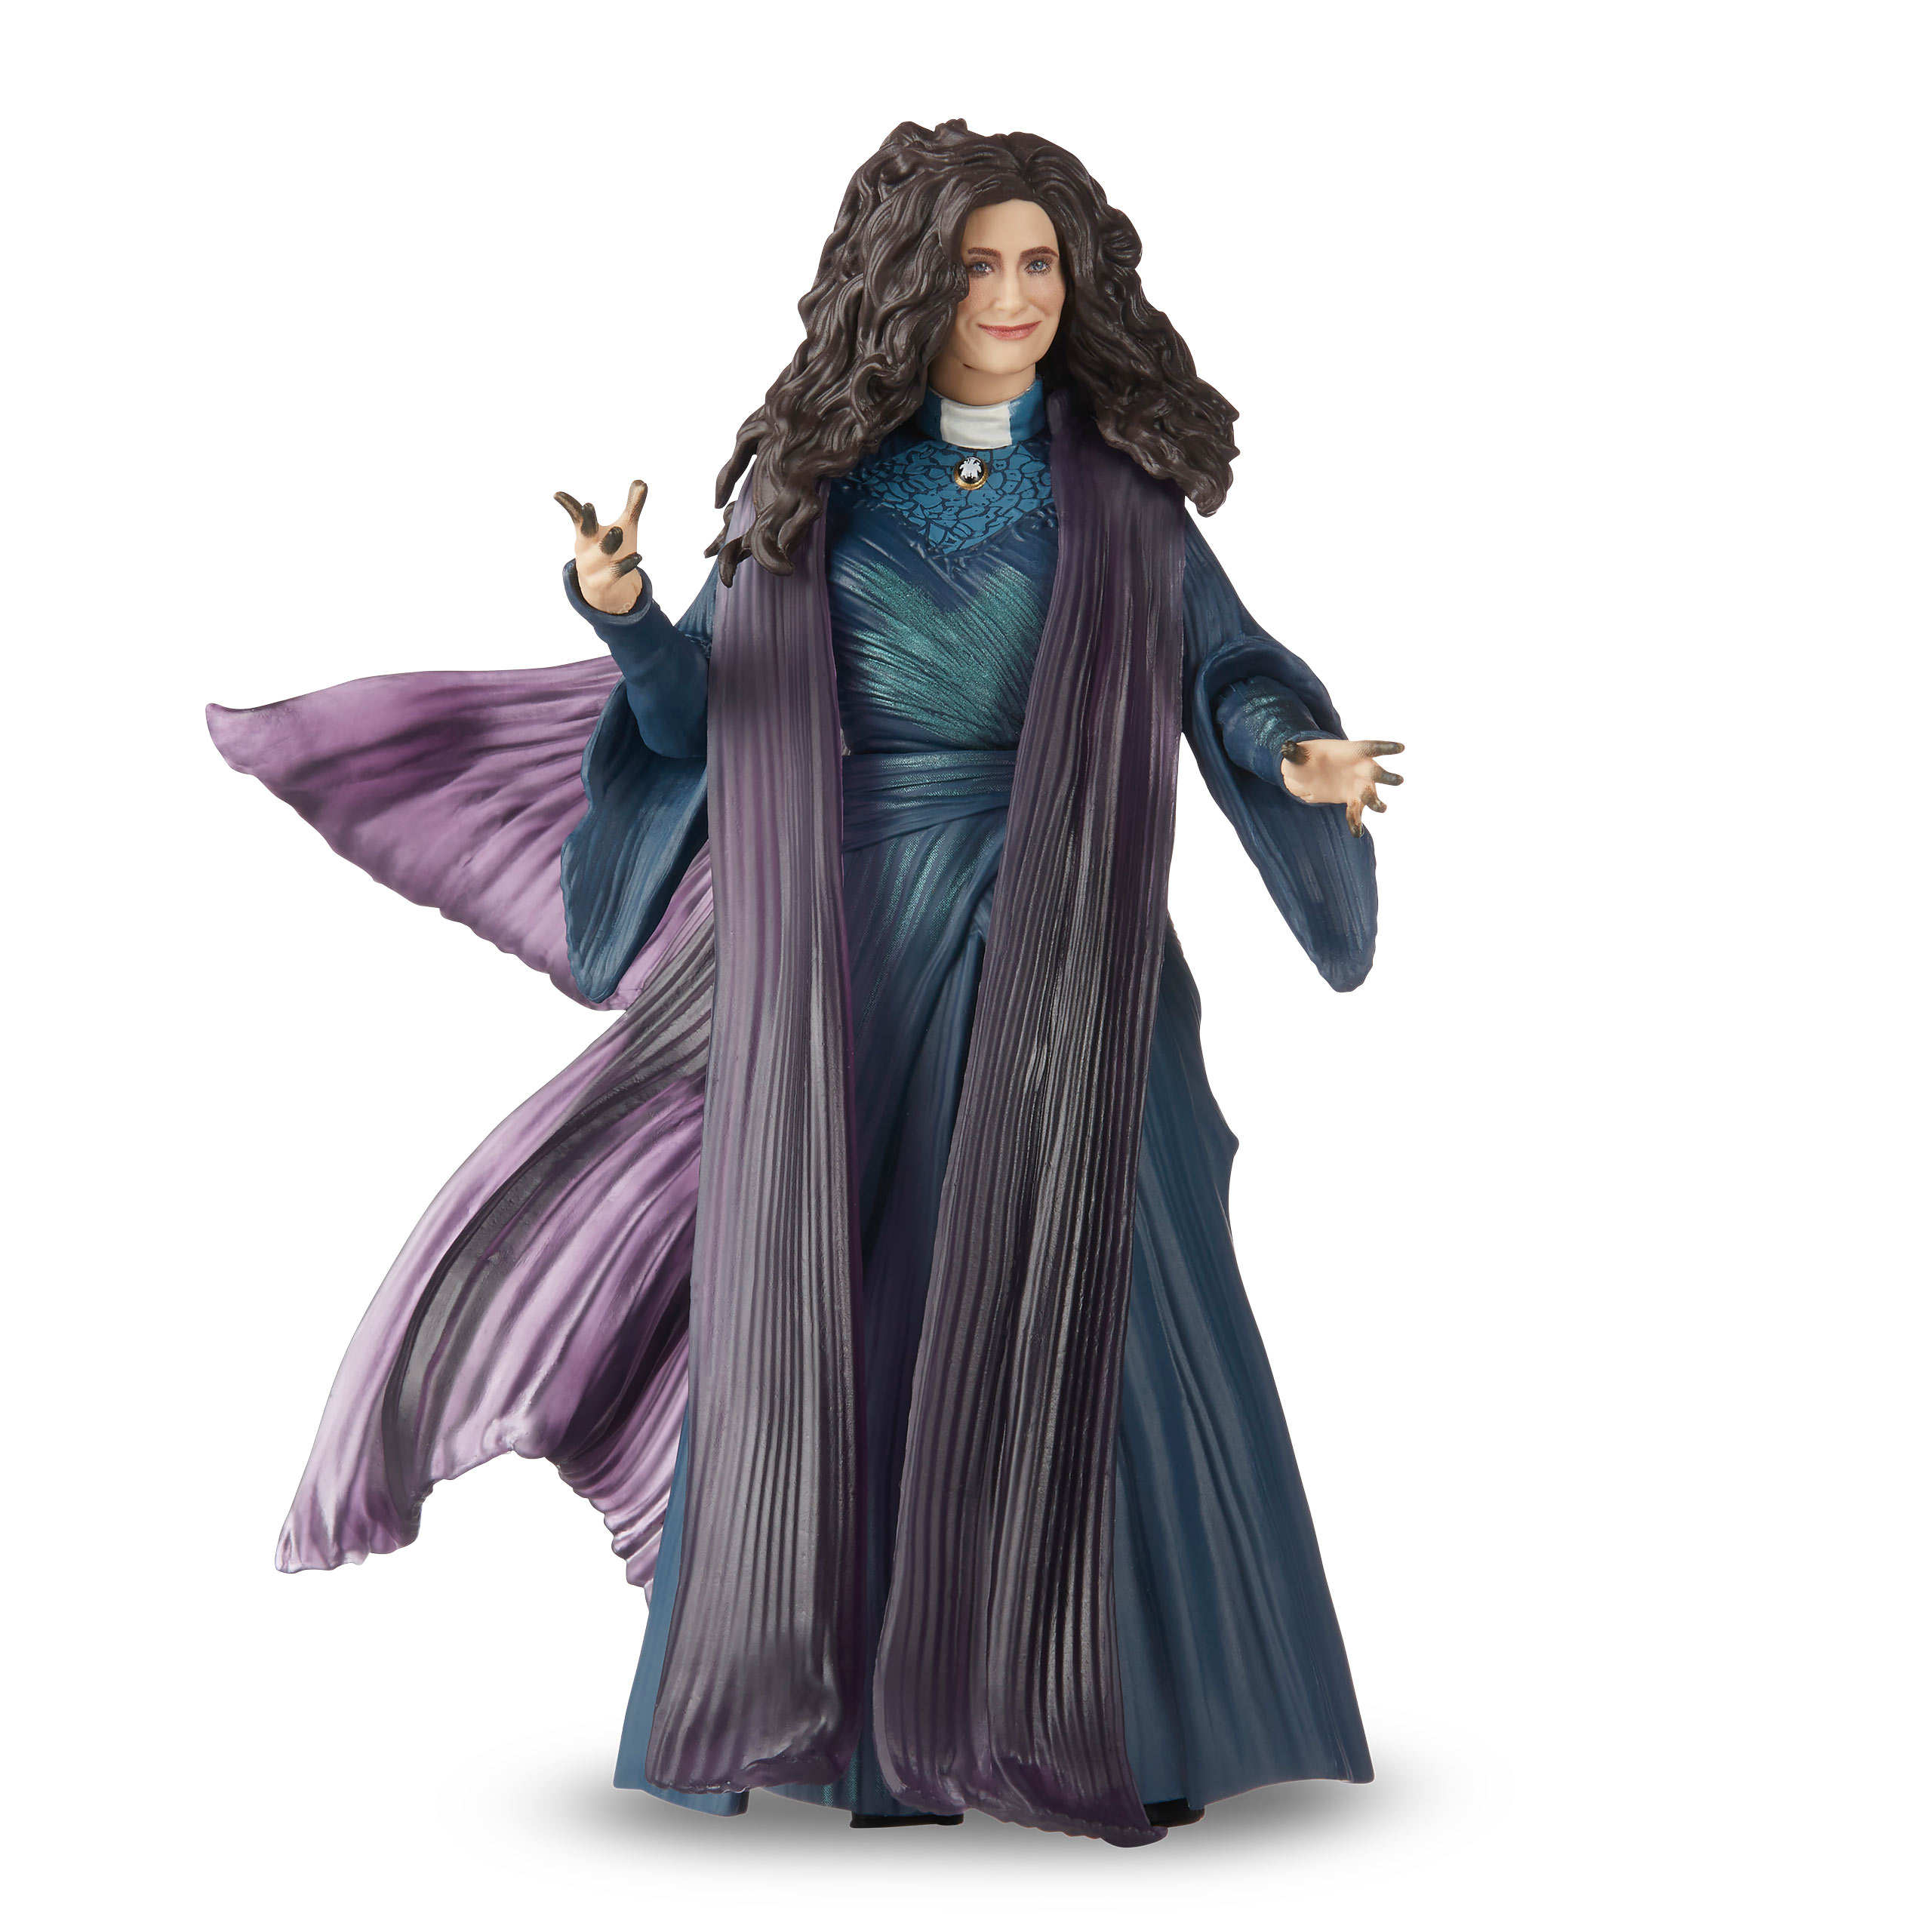 Wanda Vision - Agatha Harkness Marvel Legends Series Figurine d'action